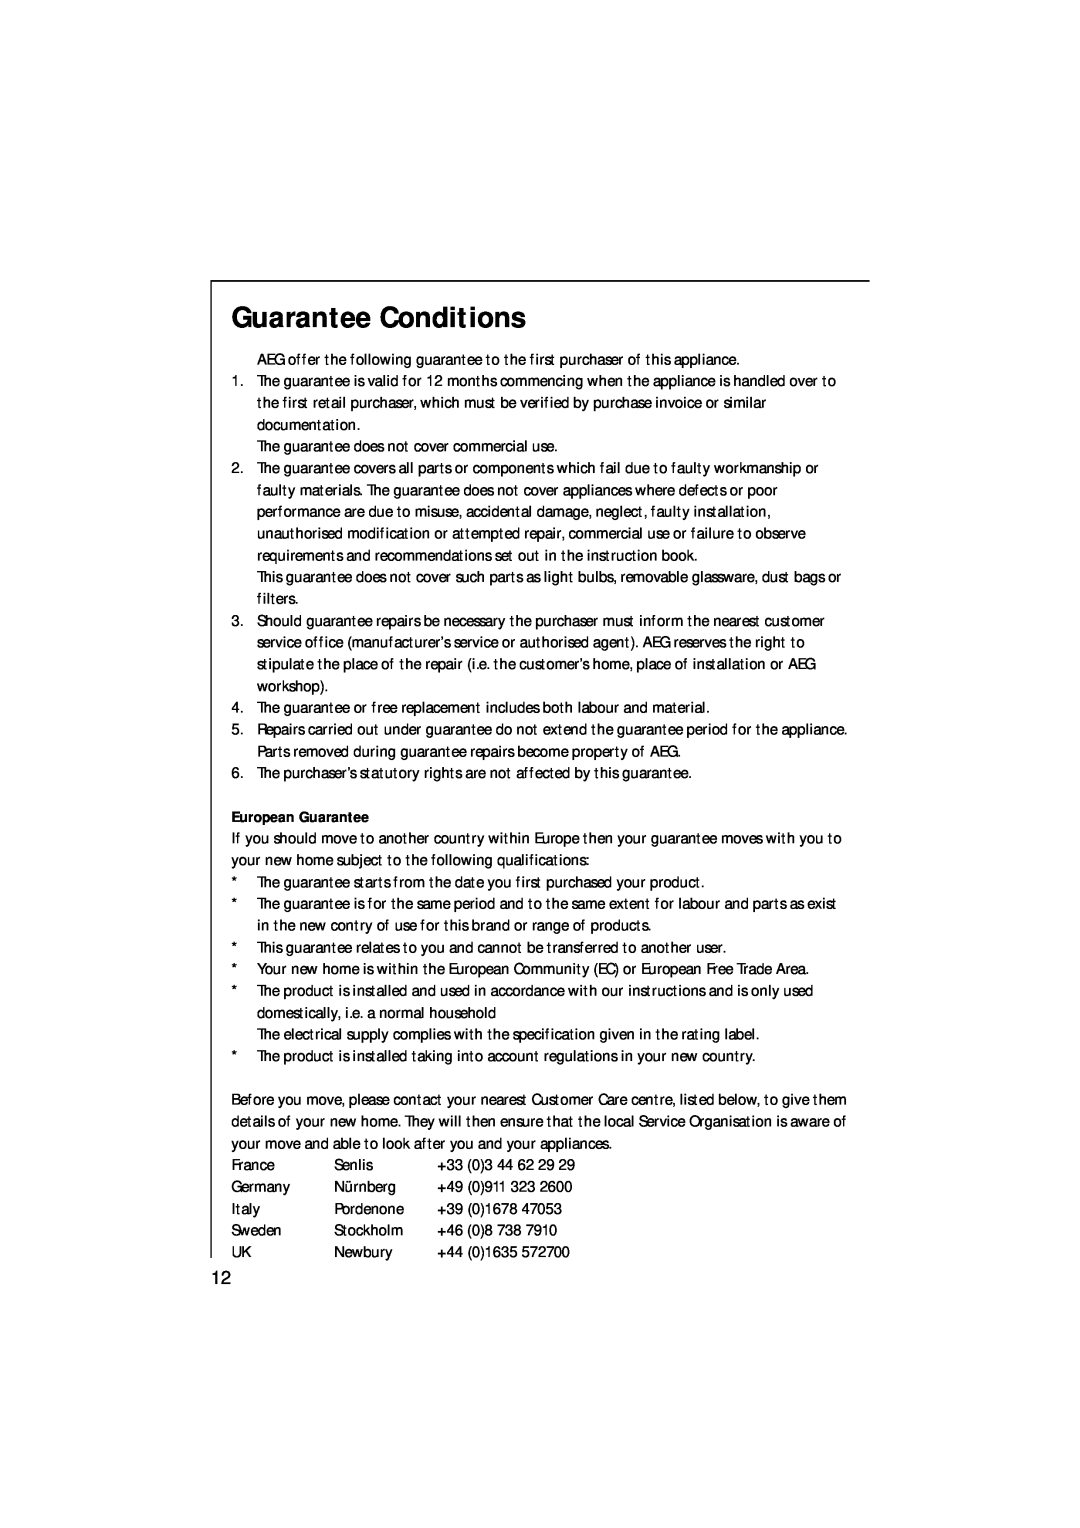 AEG 111 K - W/D/G manual Guarantee Conditions, European Guarantee 